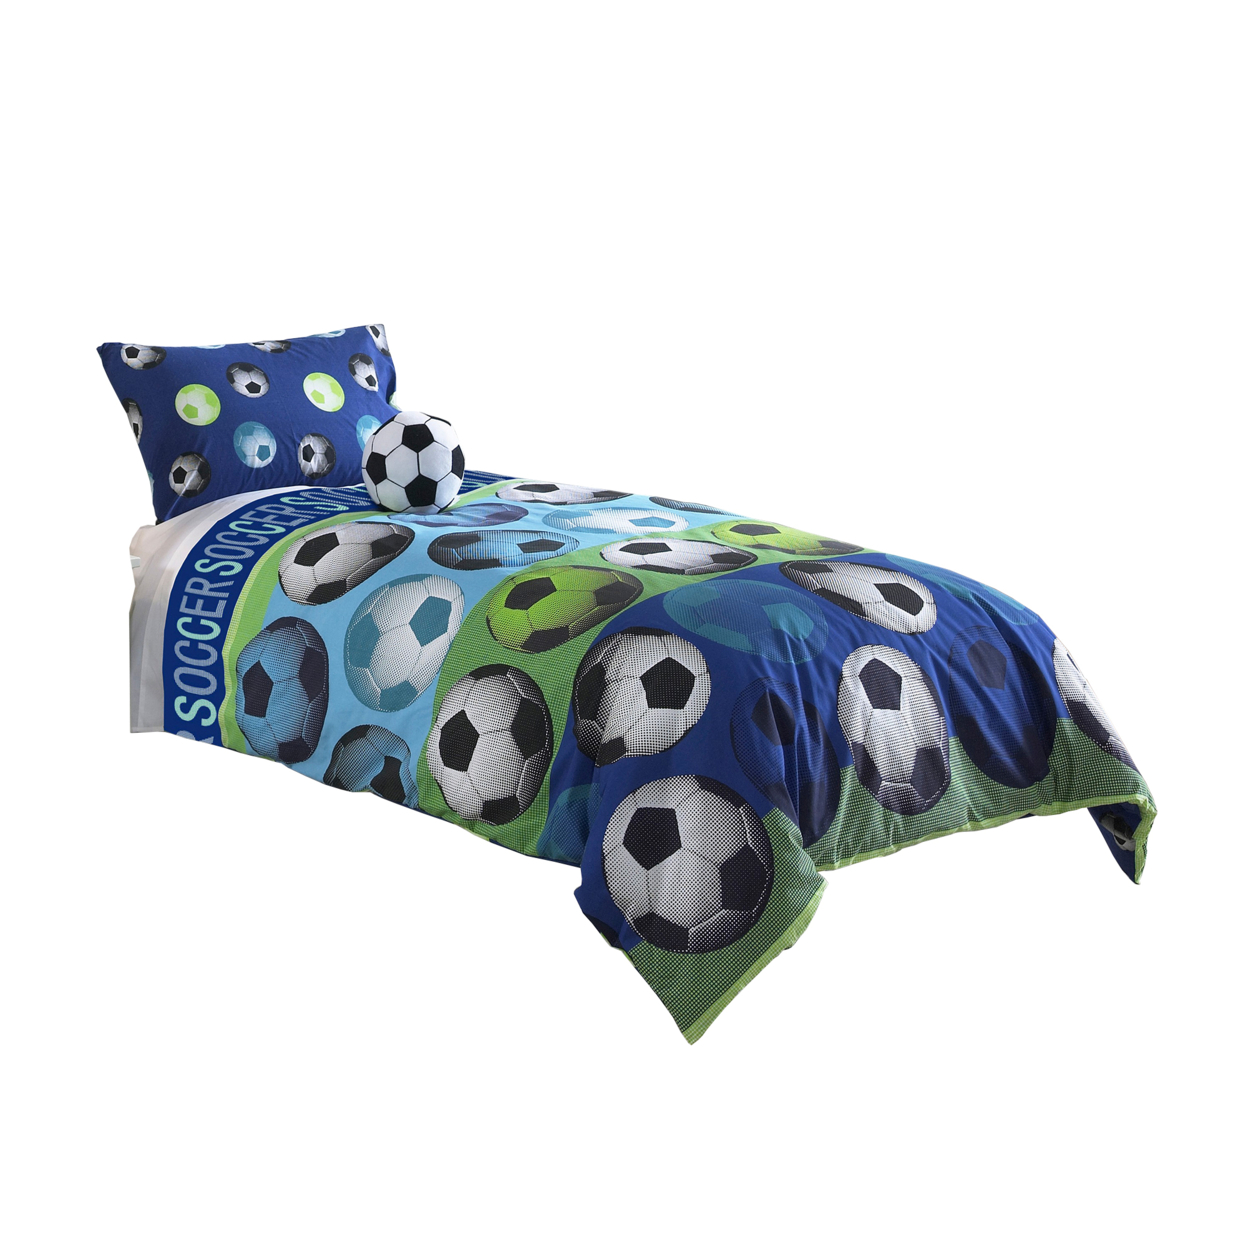 4 Piece Full Size Comforter Set With Soccer Theme, Multicolor- Saltoro Sherpi